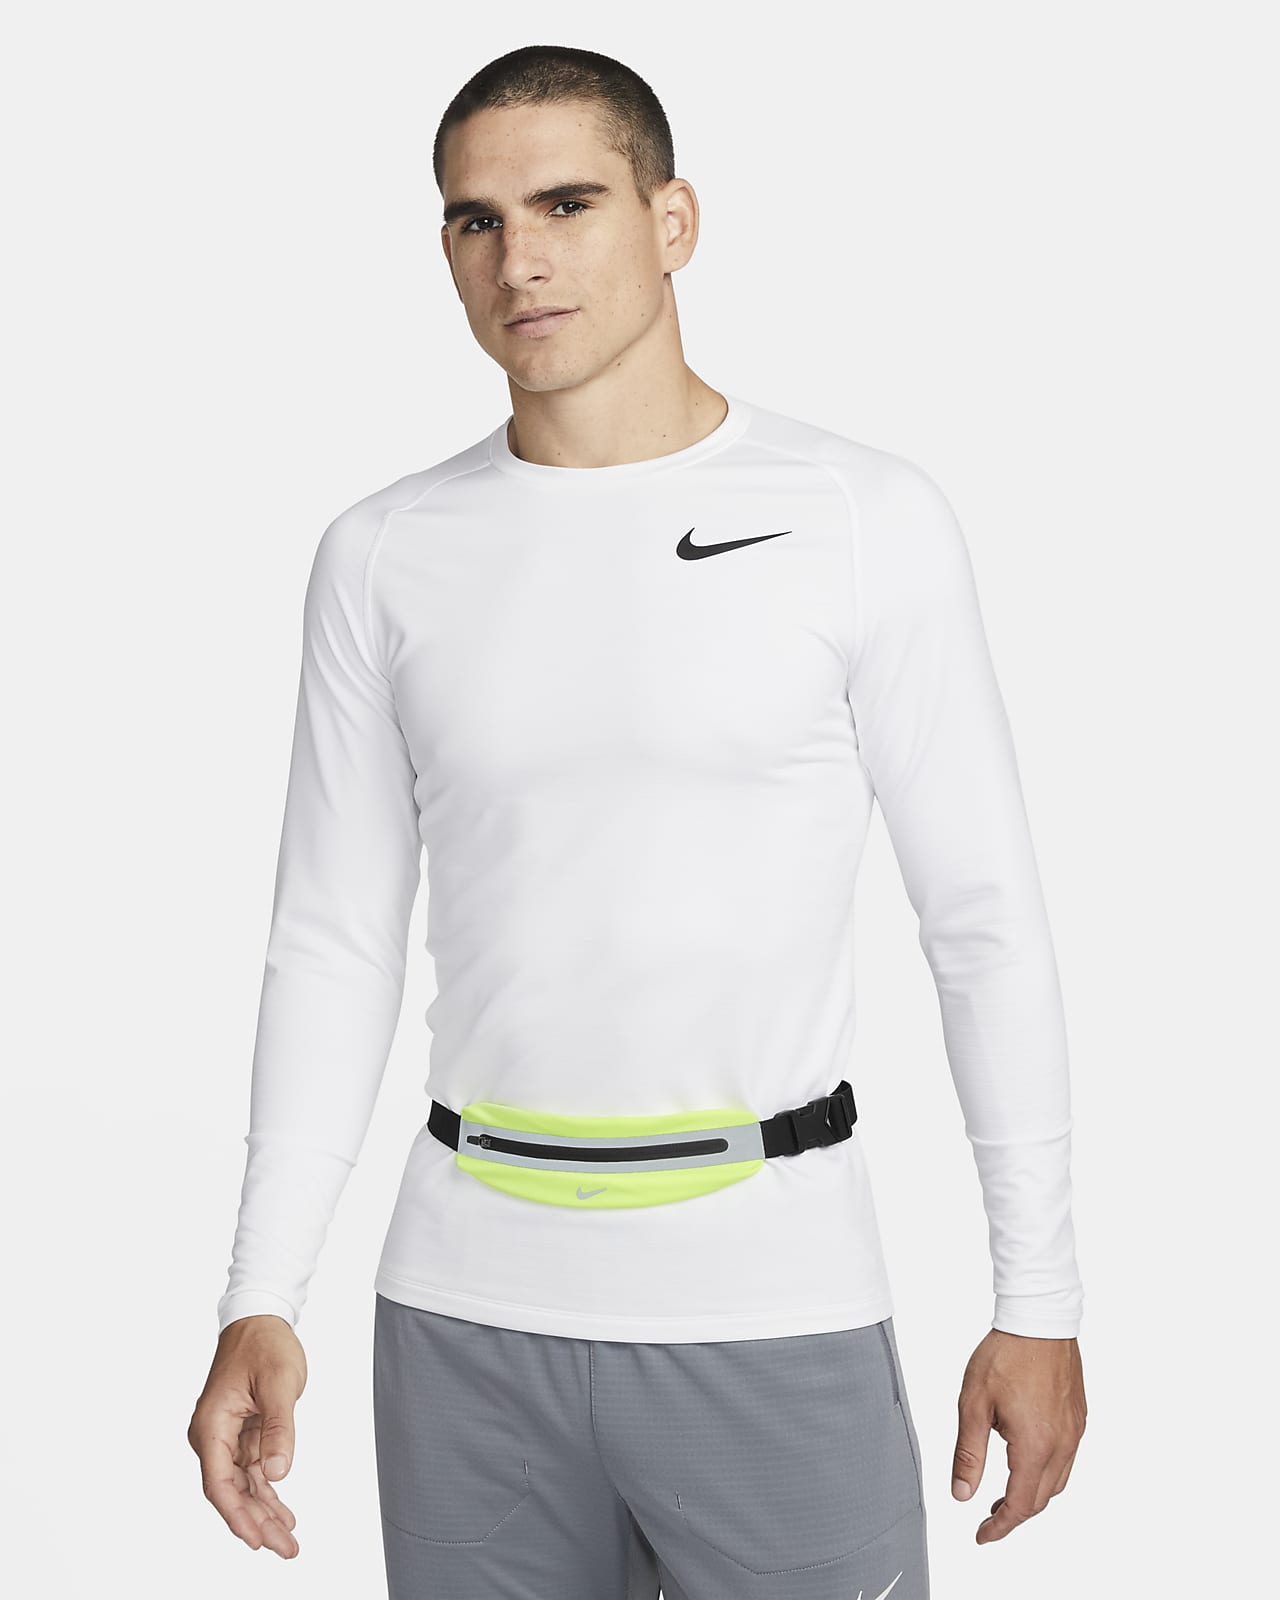 Nike-bæltetaske til løb. DK